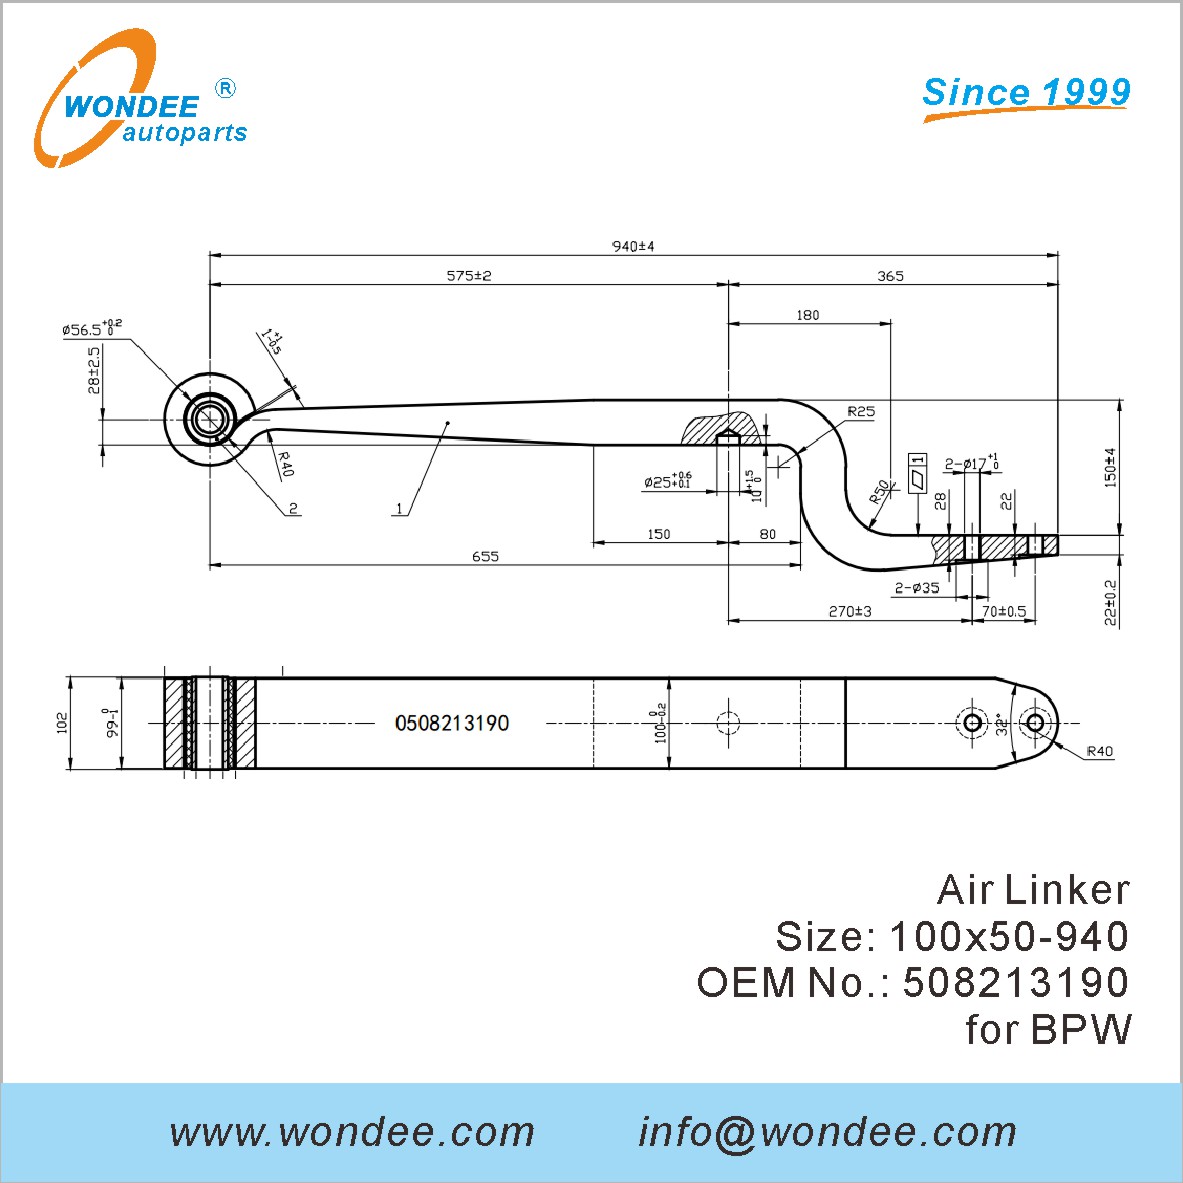 WONDEE Autoparts Air Linker OEM 508213190 for BPW